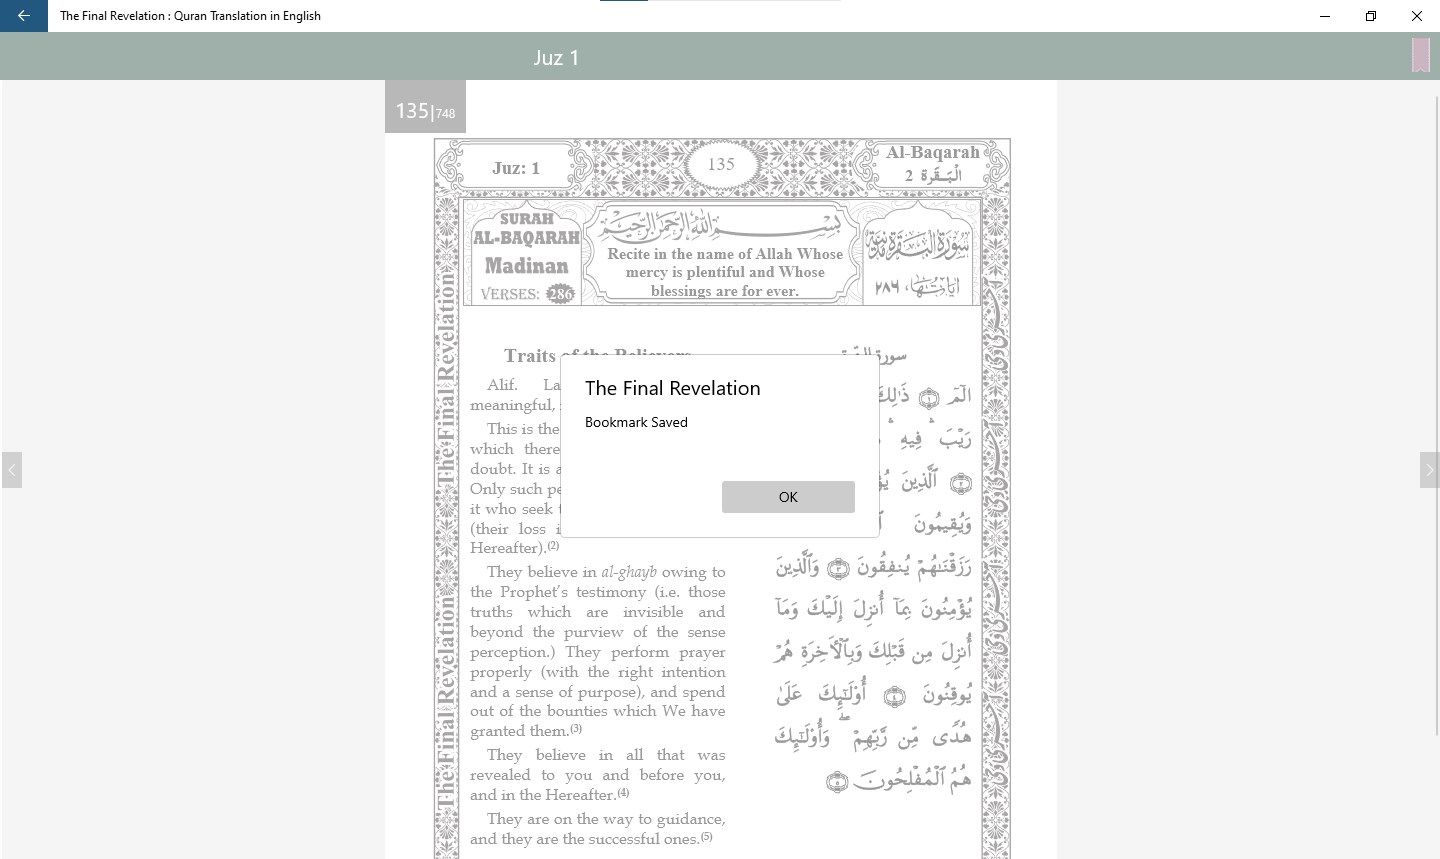 The Final Revelation: Quran Translation in English